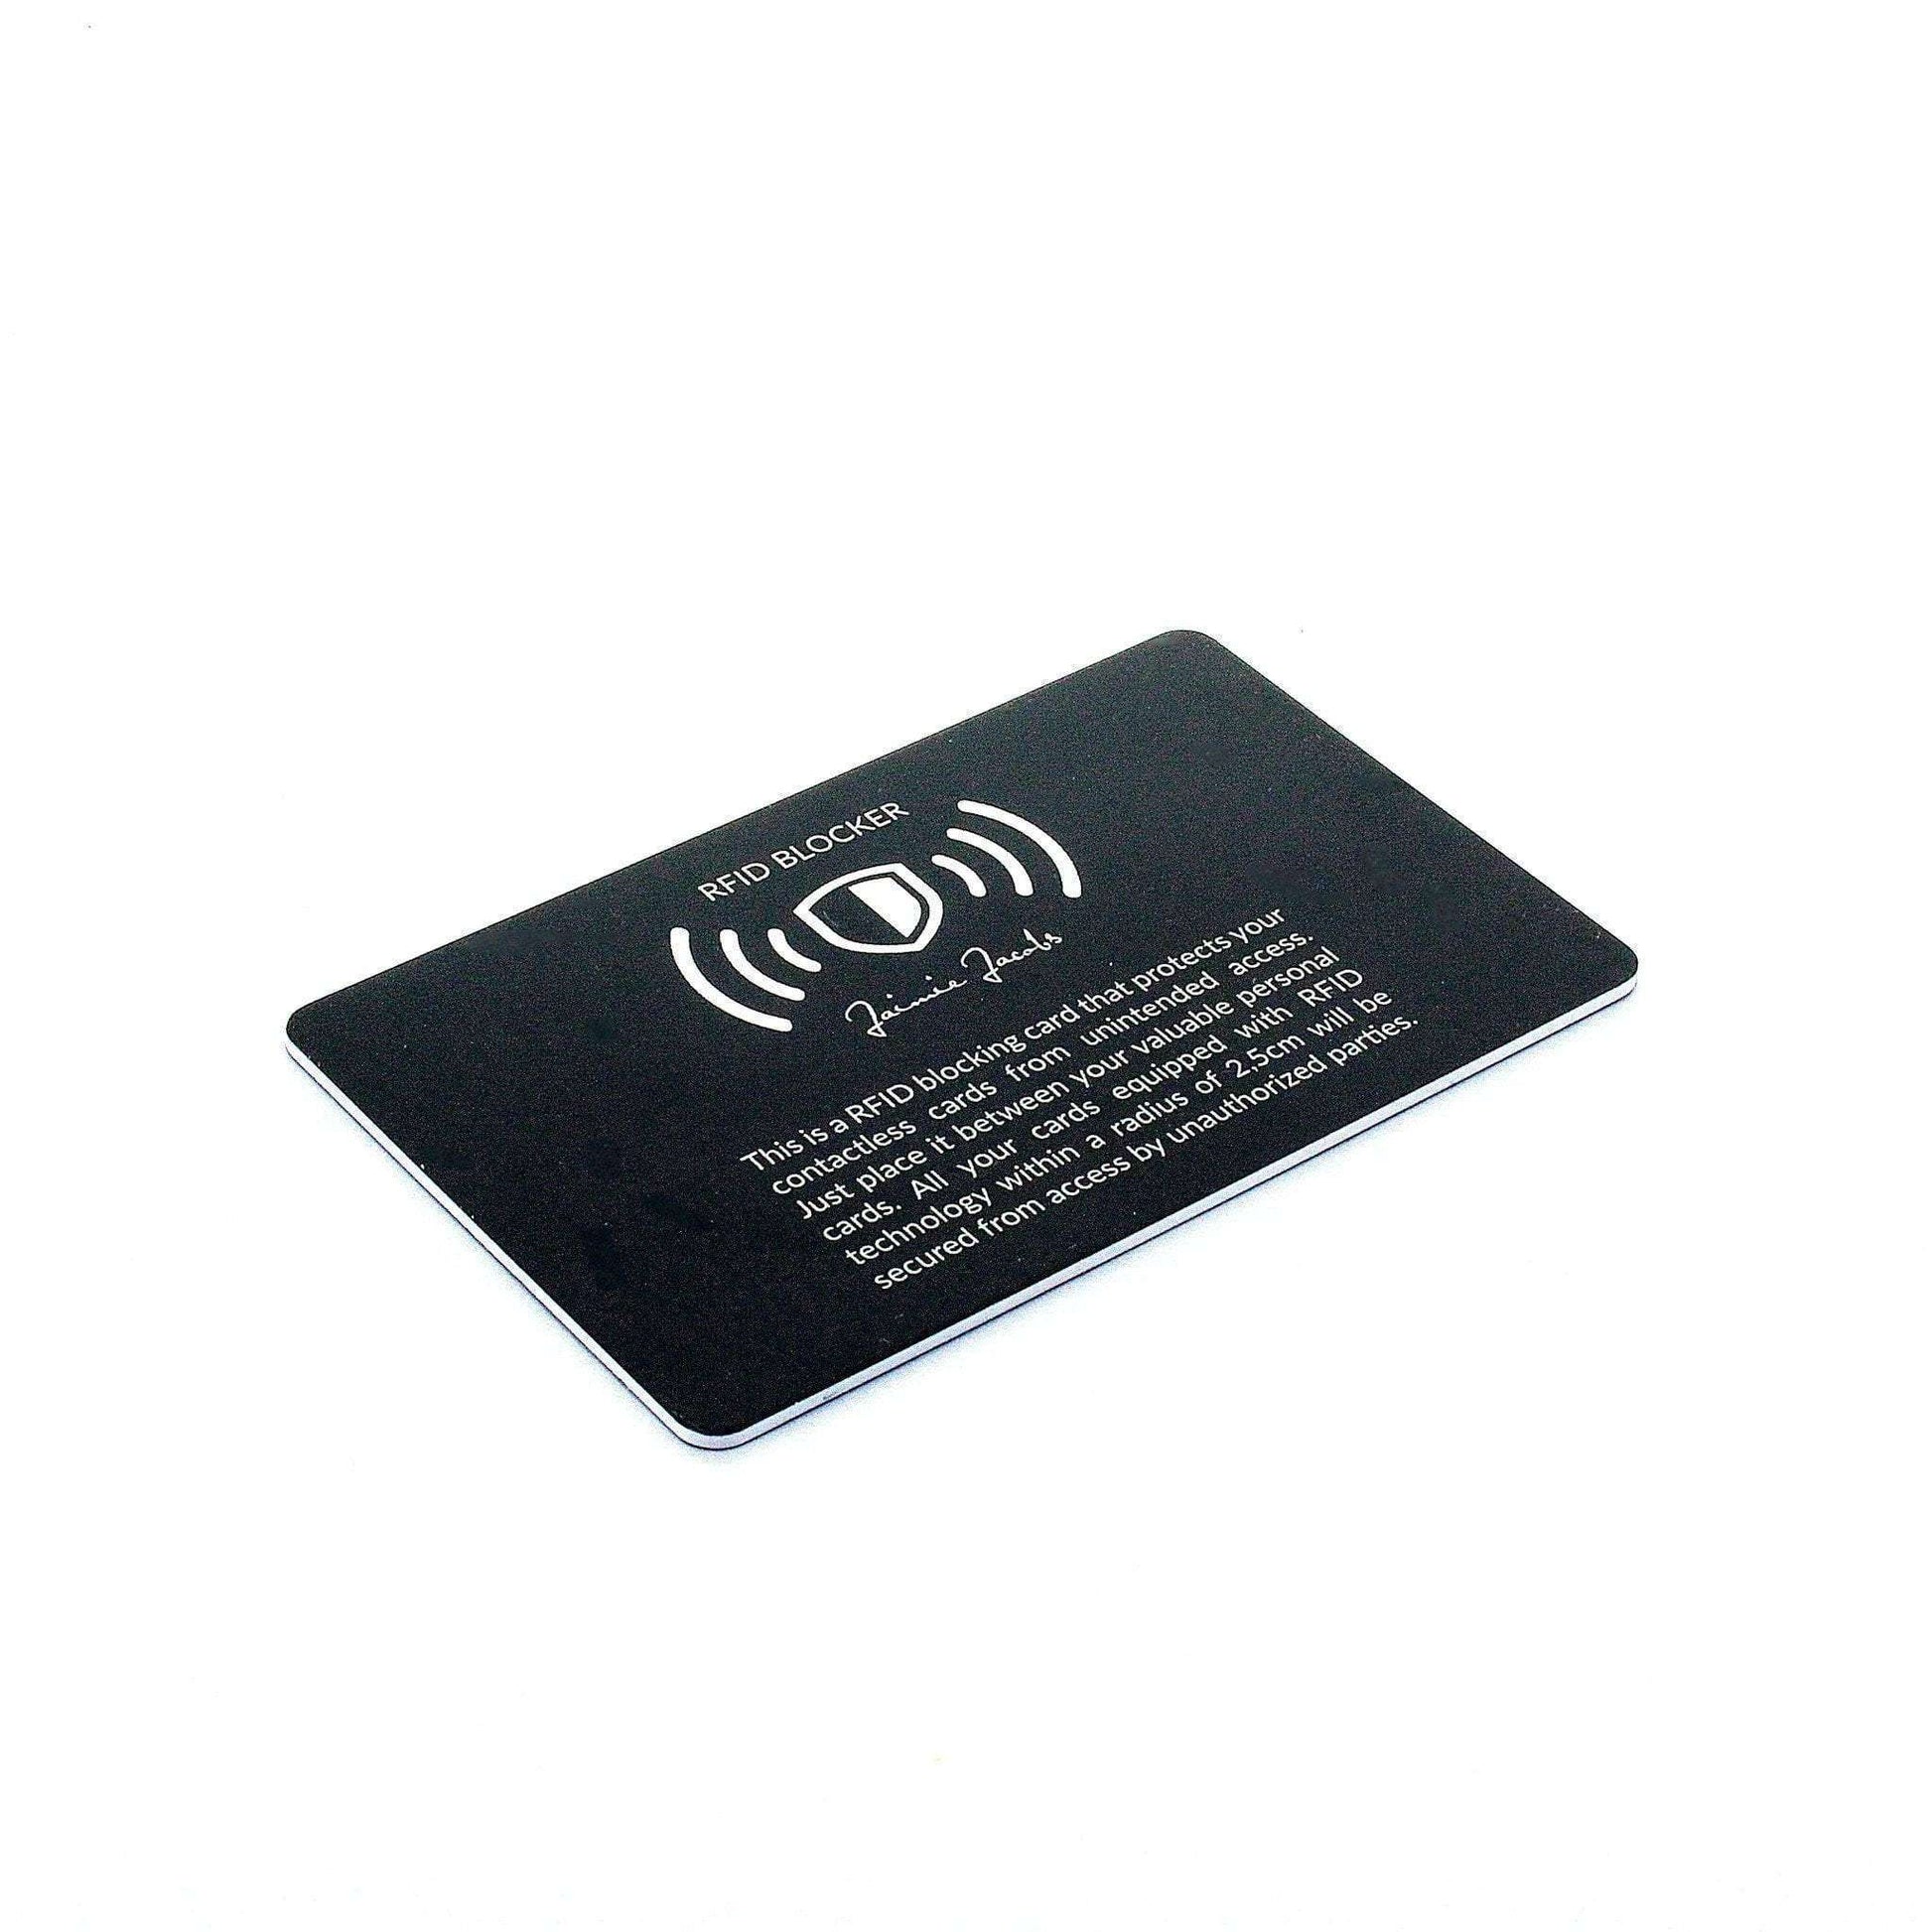 2 x RFID/NFC Signal Blocking Card. Credit/Debit Card Blocker Protector